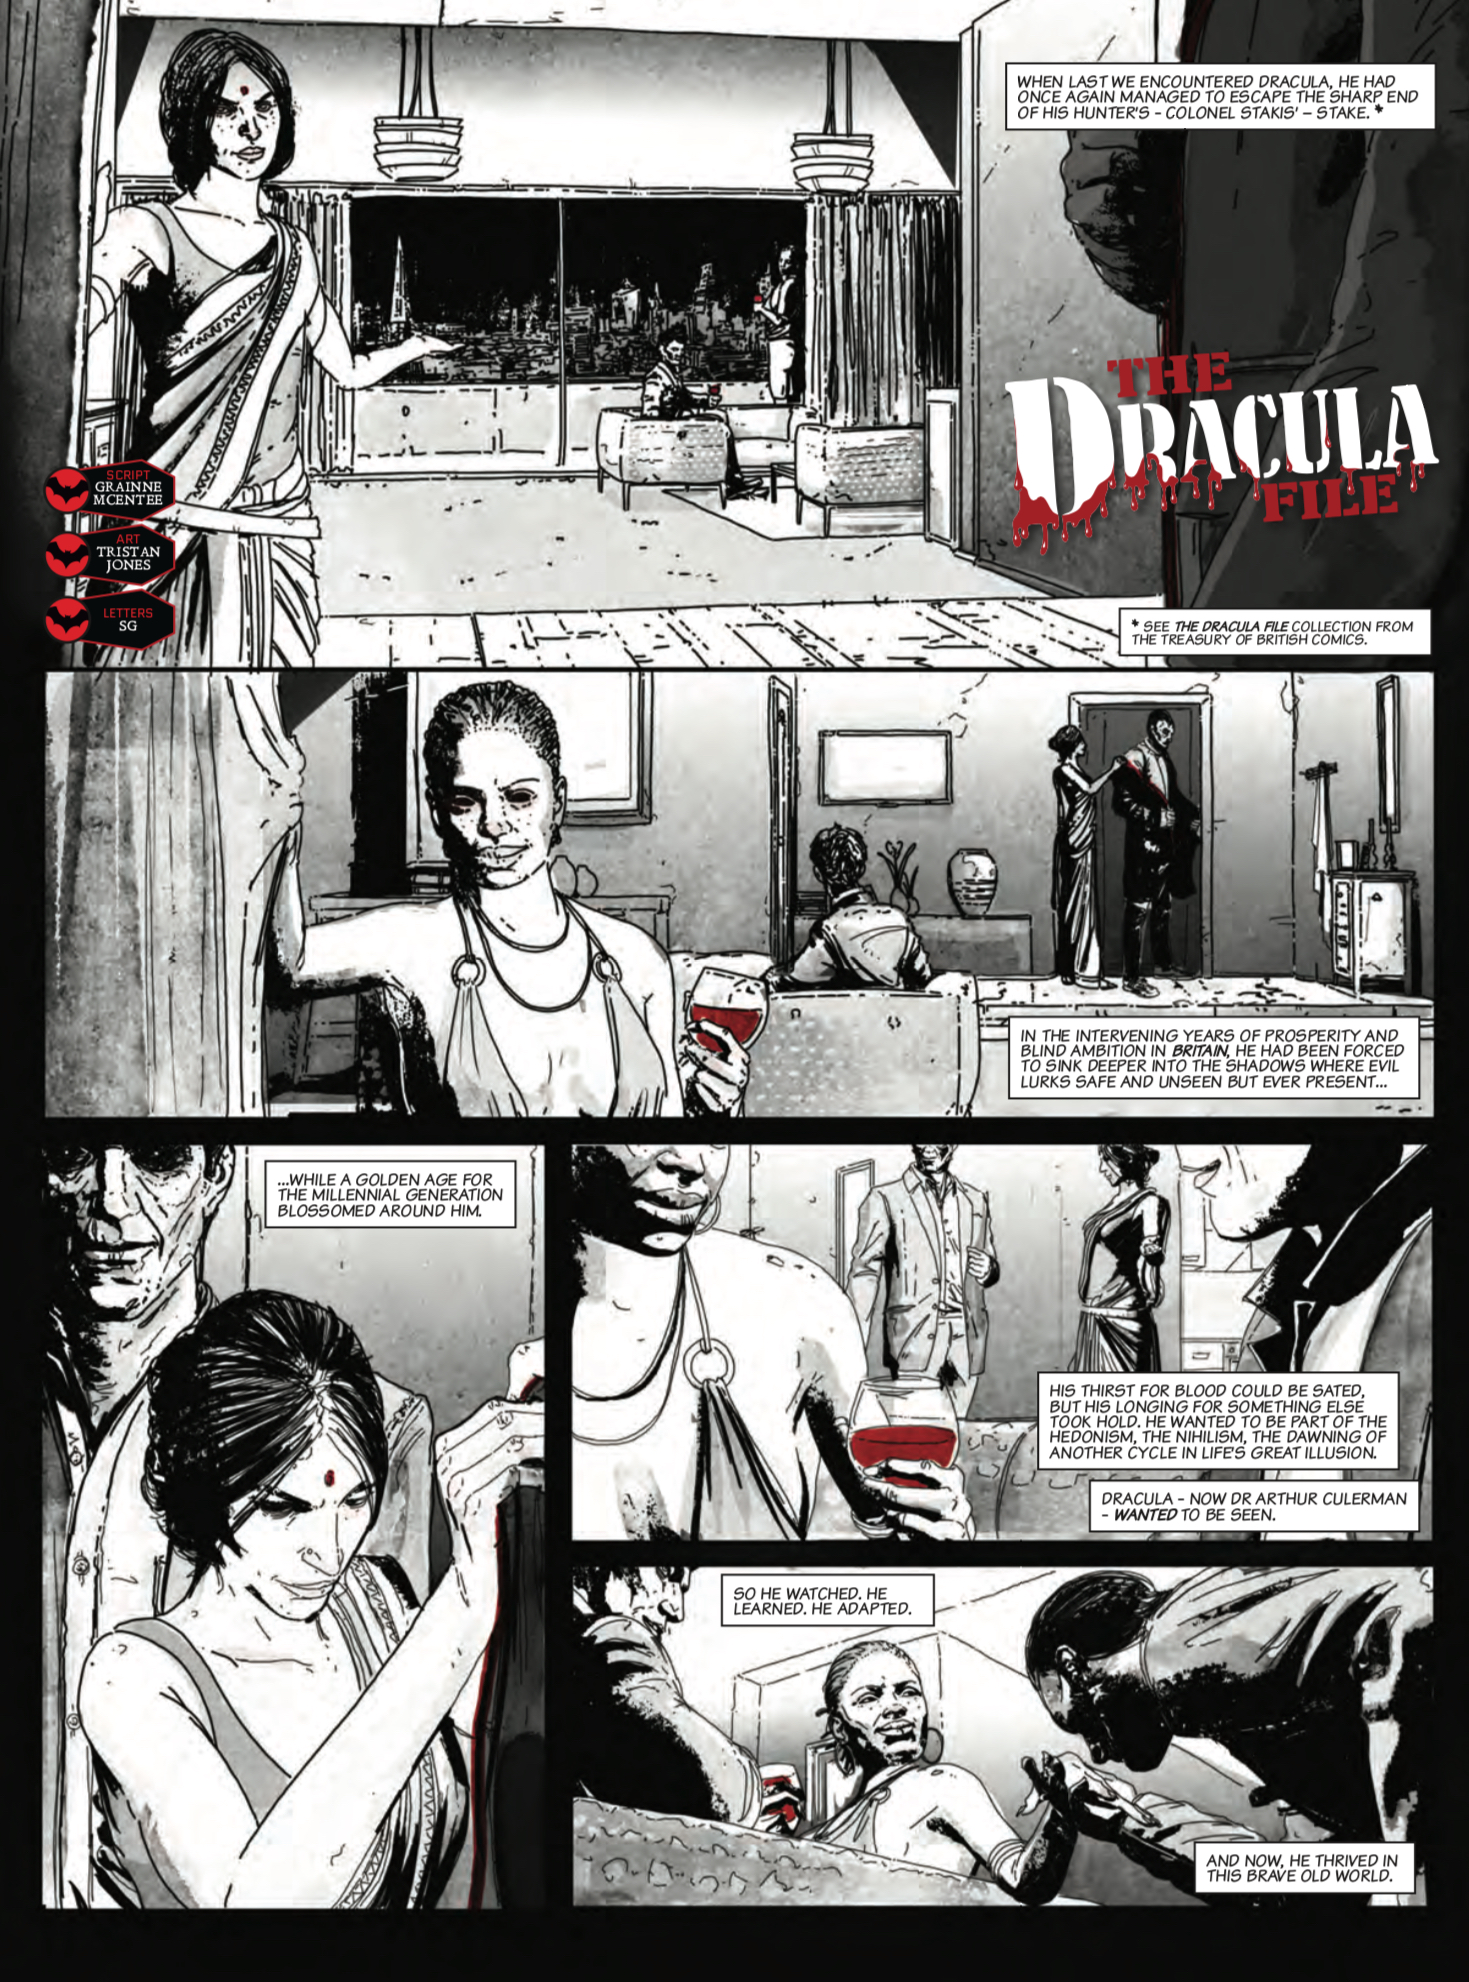 “The Dracula File” by Grainne McEntee and Tristan Jones